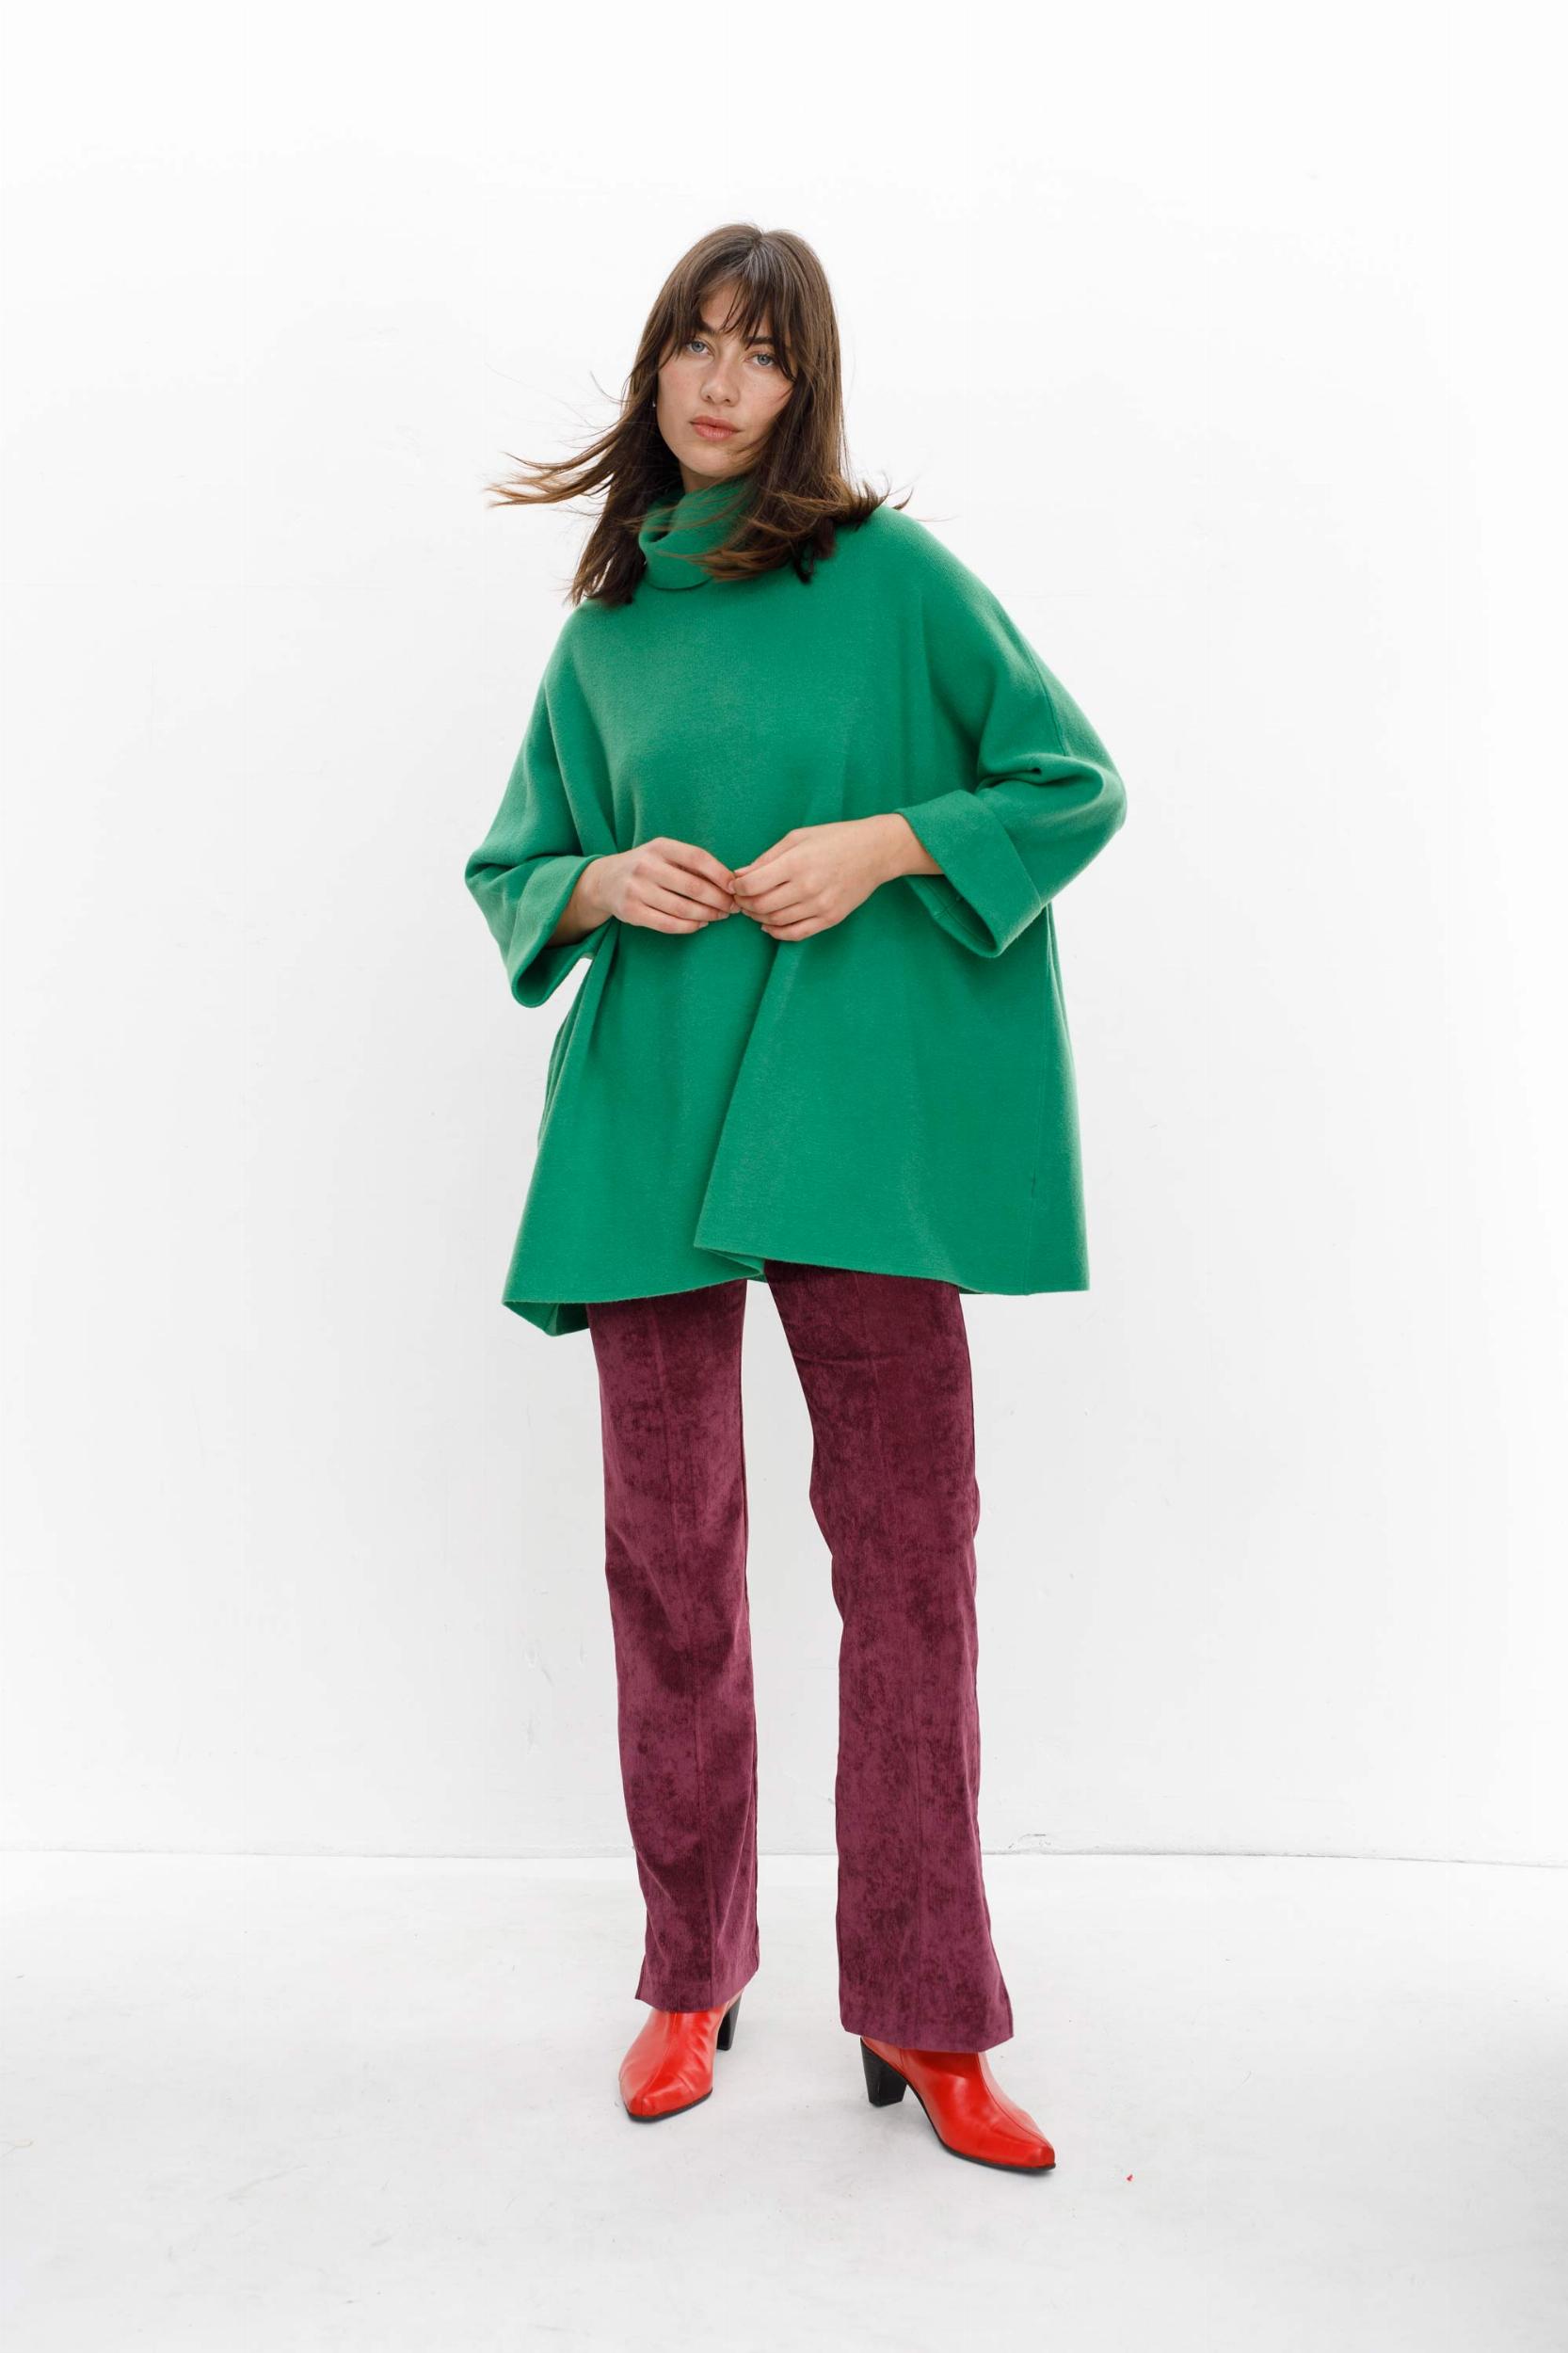 Sweater Vilma verde talle unico